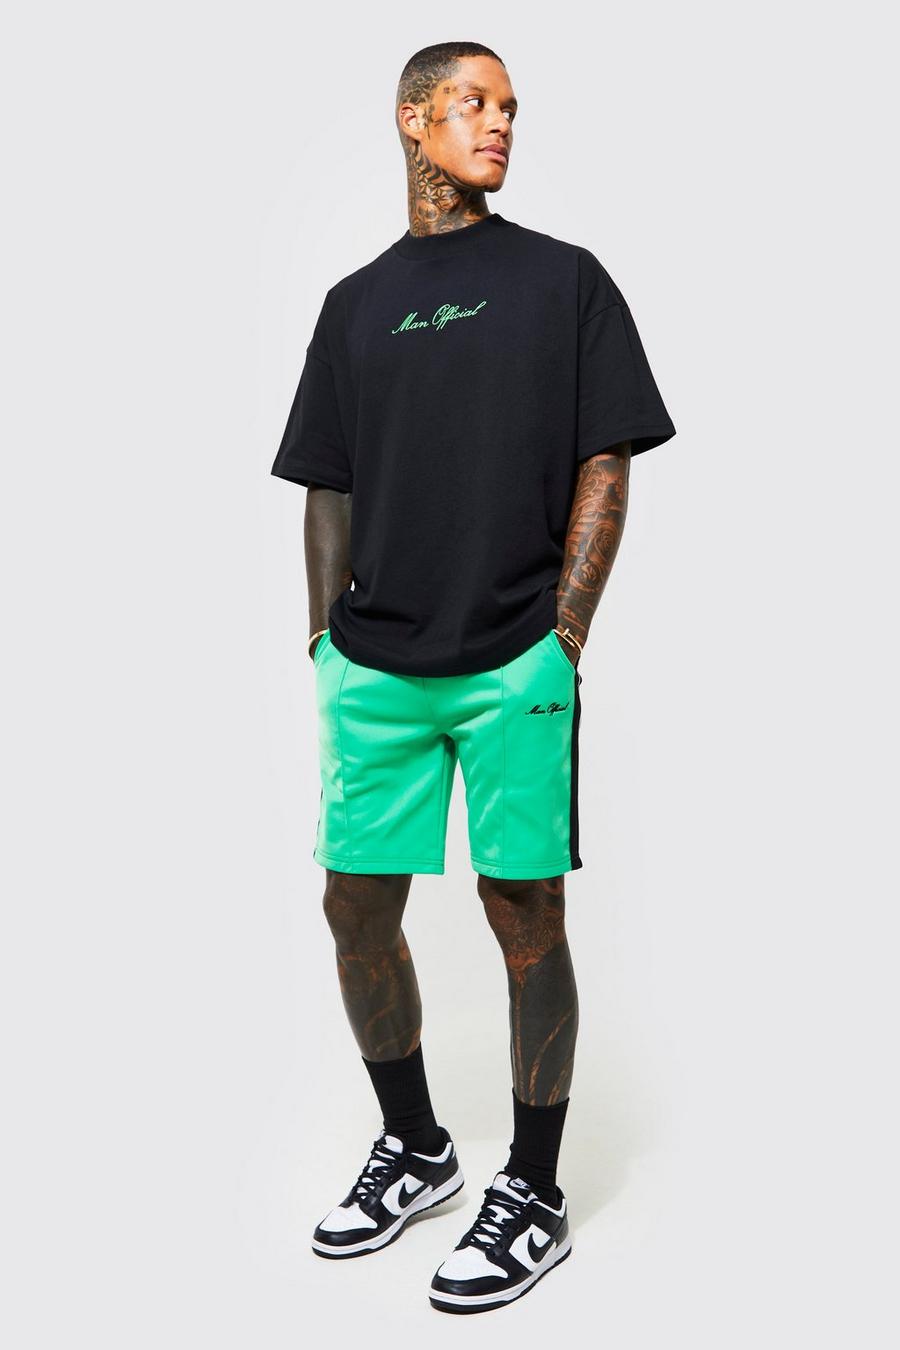 Ensemble oversize imprimé avec t-shirt et short, Green vert